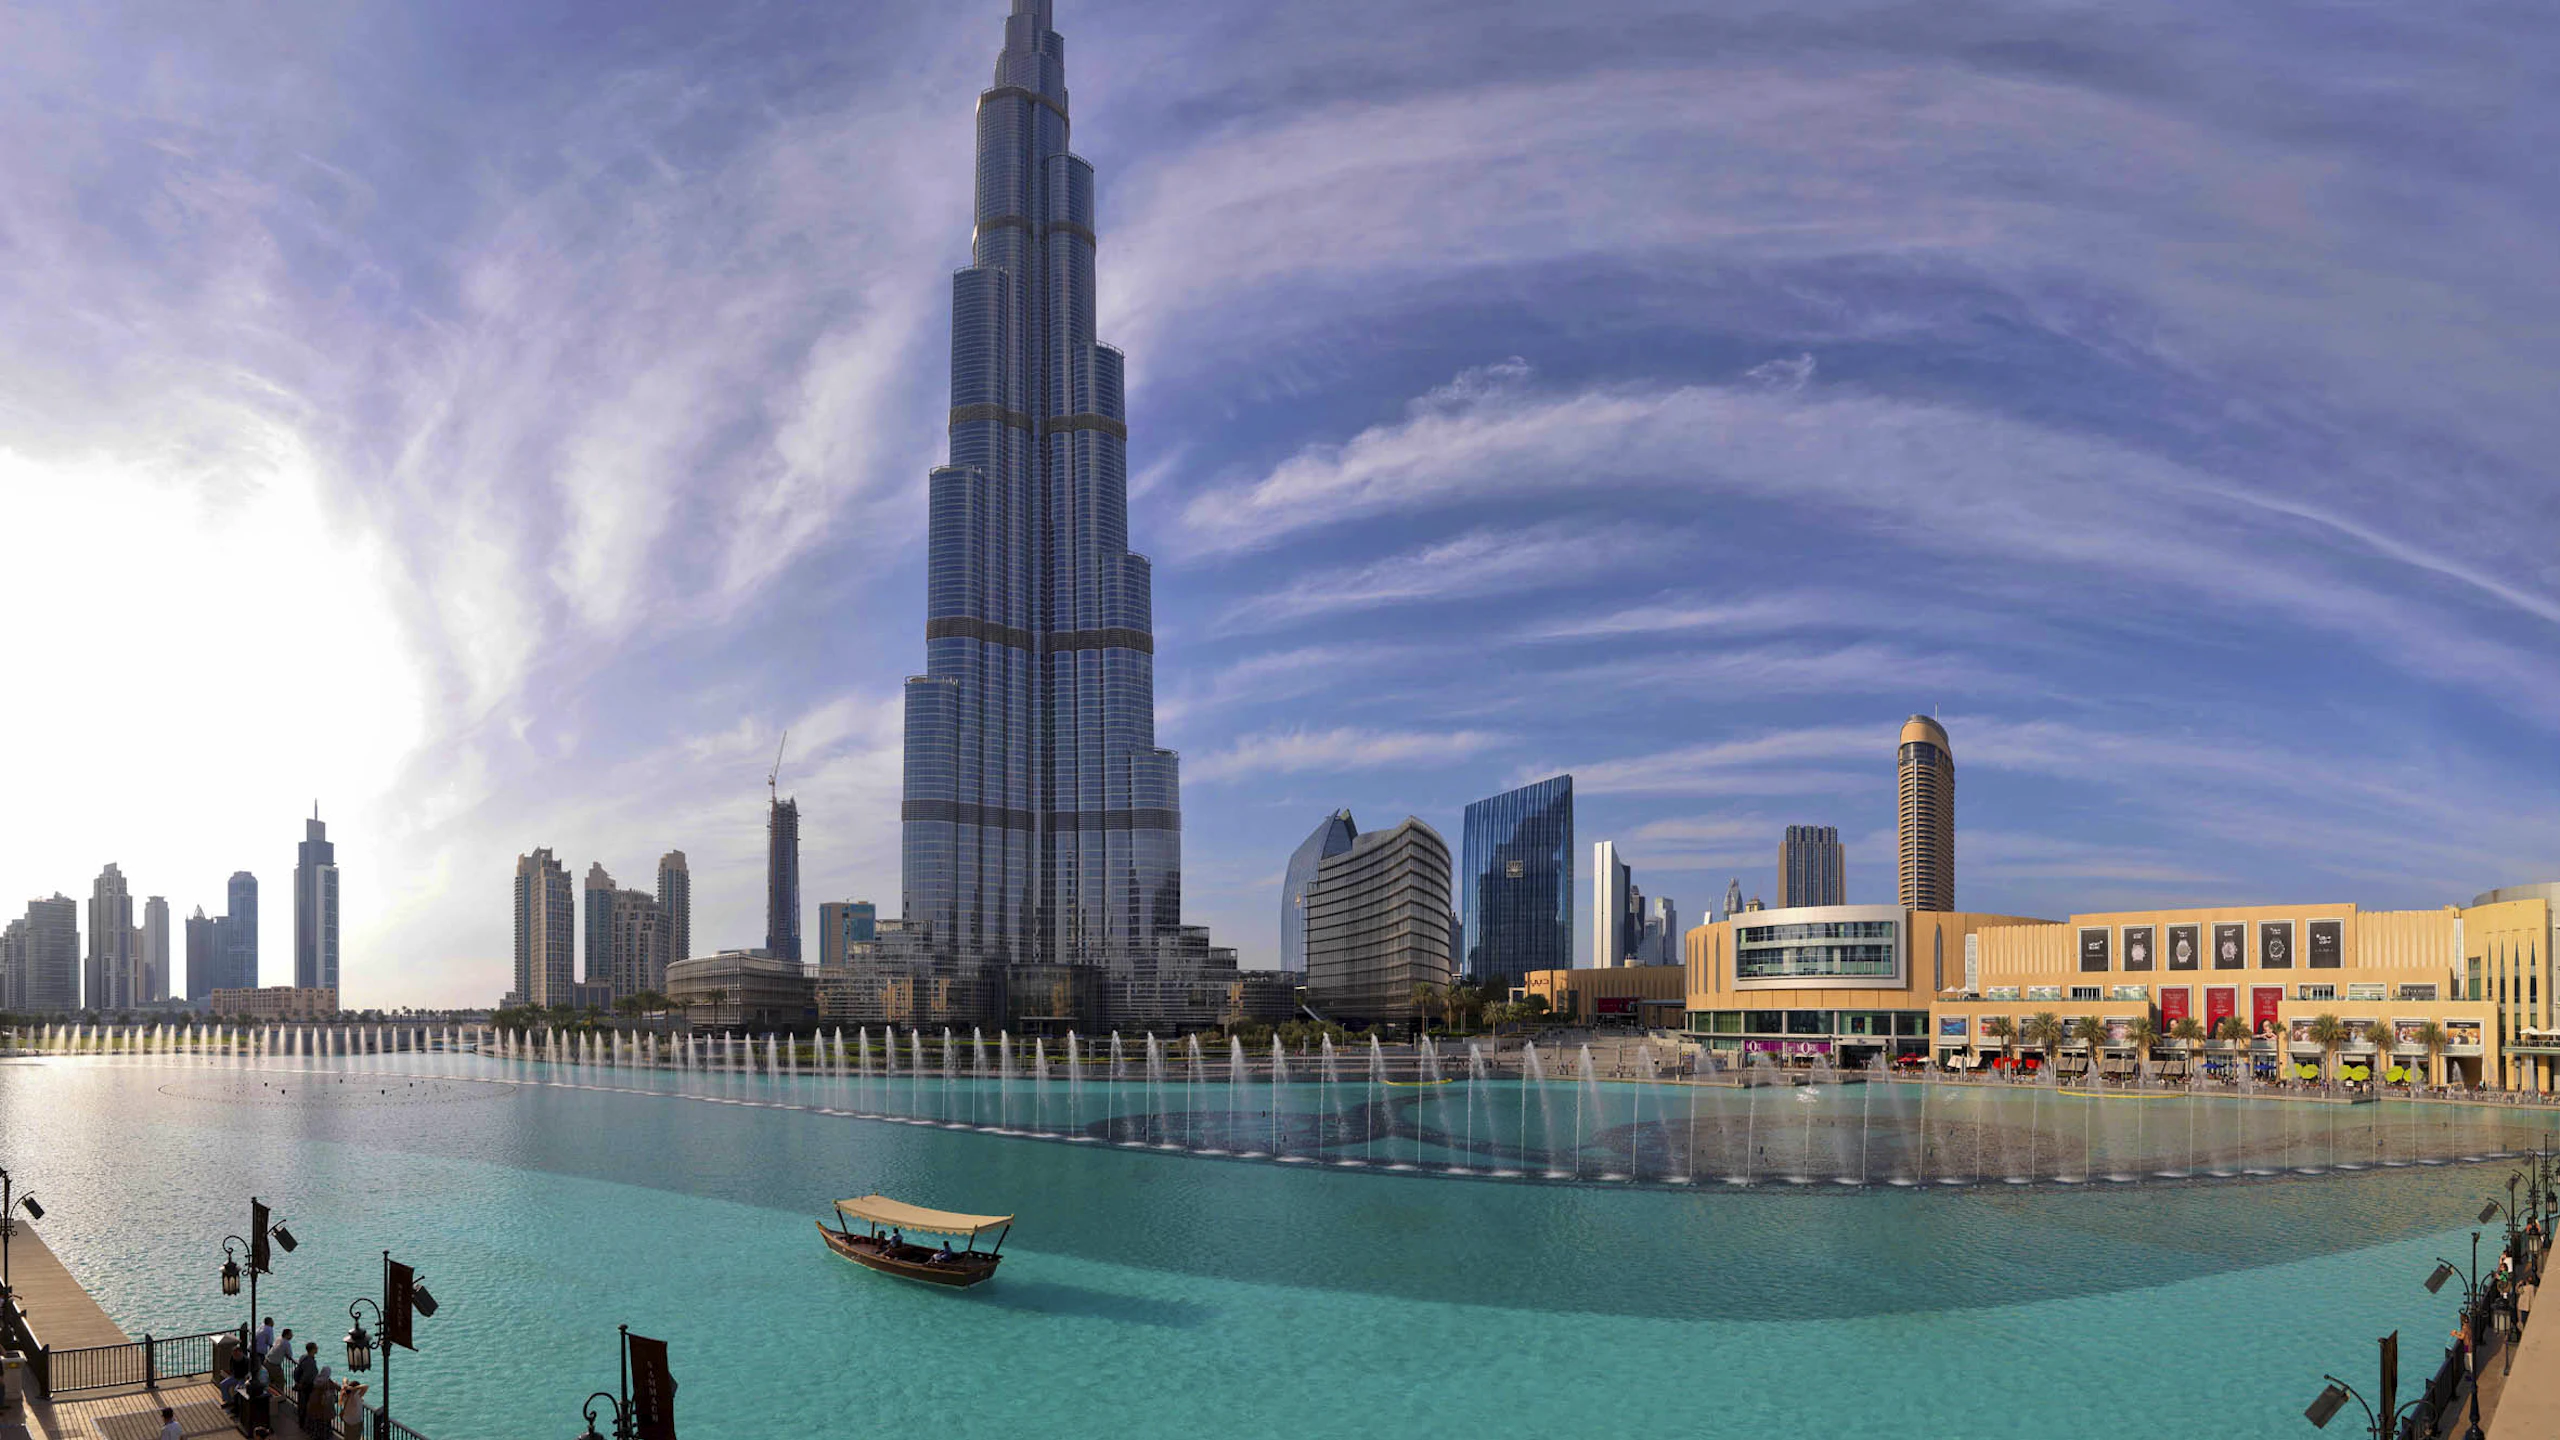 The Dubai Fountain Show and Lake Ride Ticket